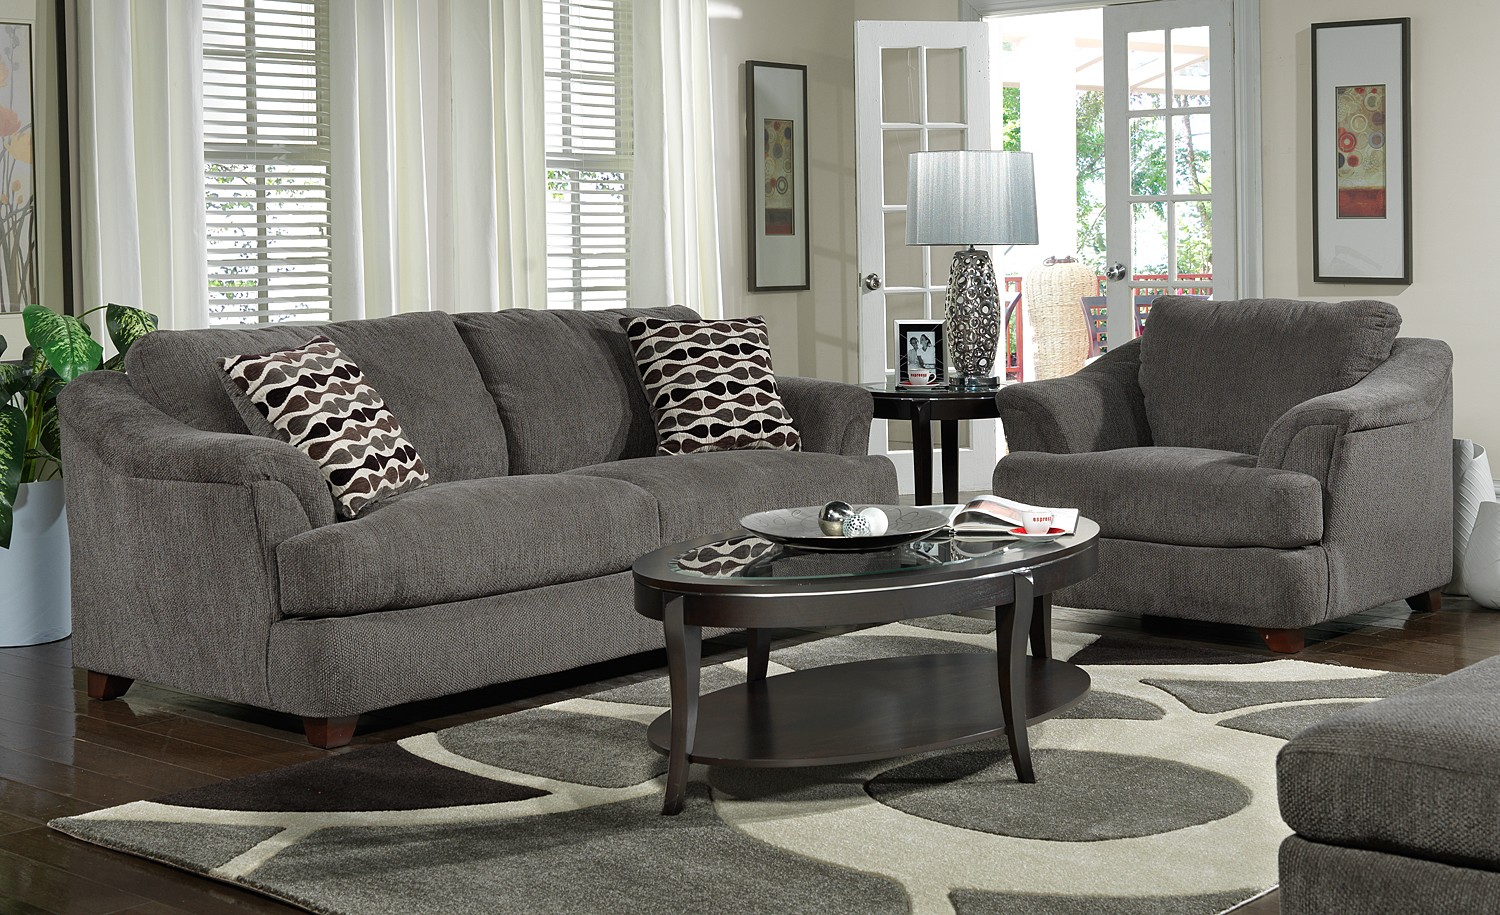  gray  living  room  furniture 2019 Grasscloth Wallpaper